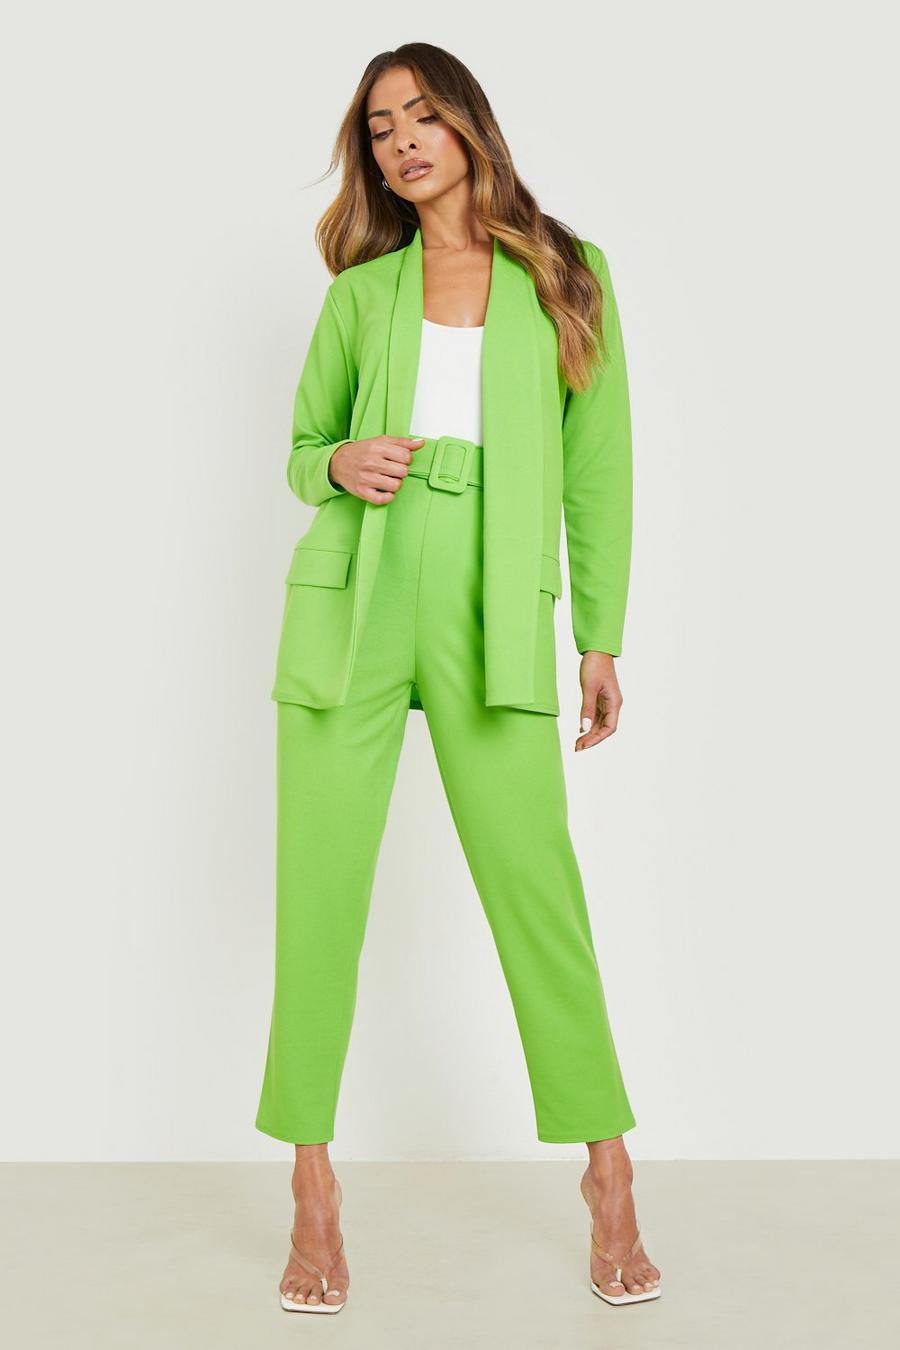 Apple green grün Blazer & Self Fabric Trouser Suit Set